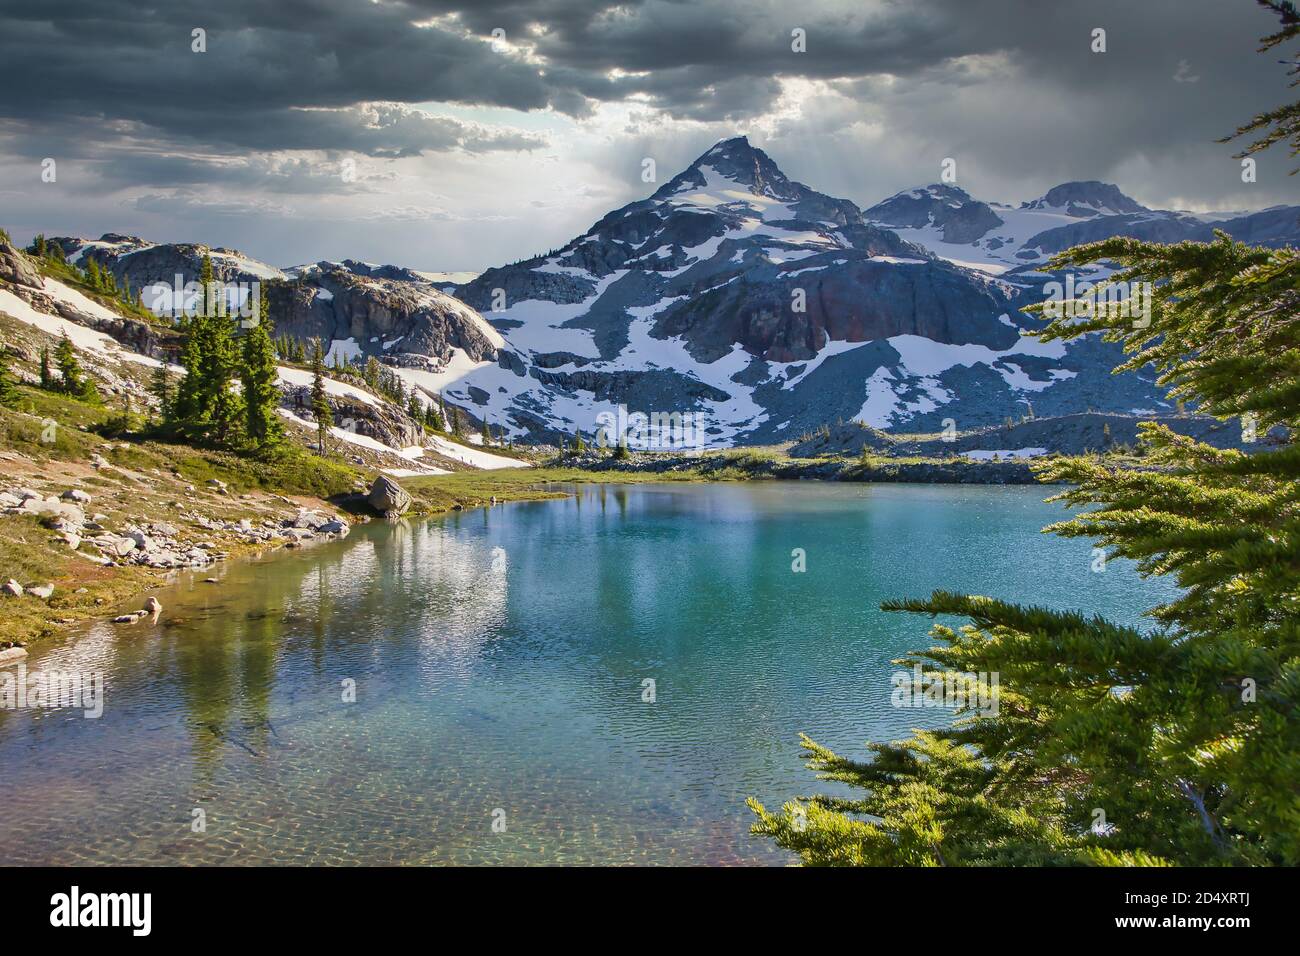 Turqoise glacial lake in mountain alpine area, British Columbia, Canada Stock Photo